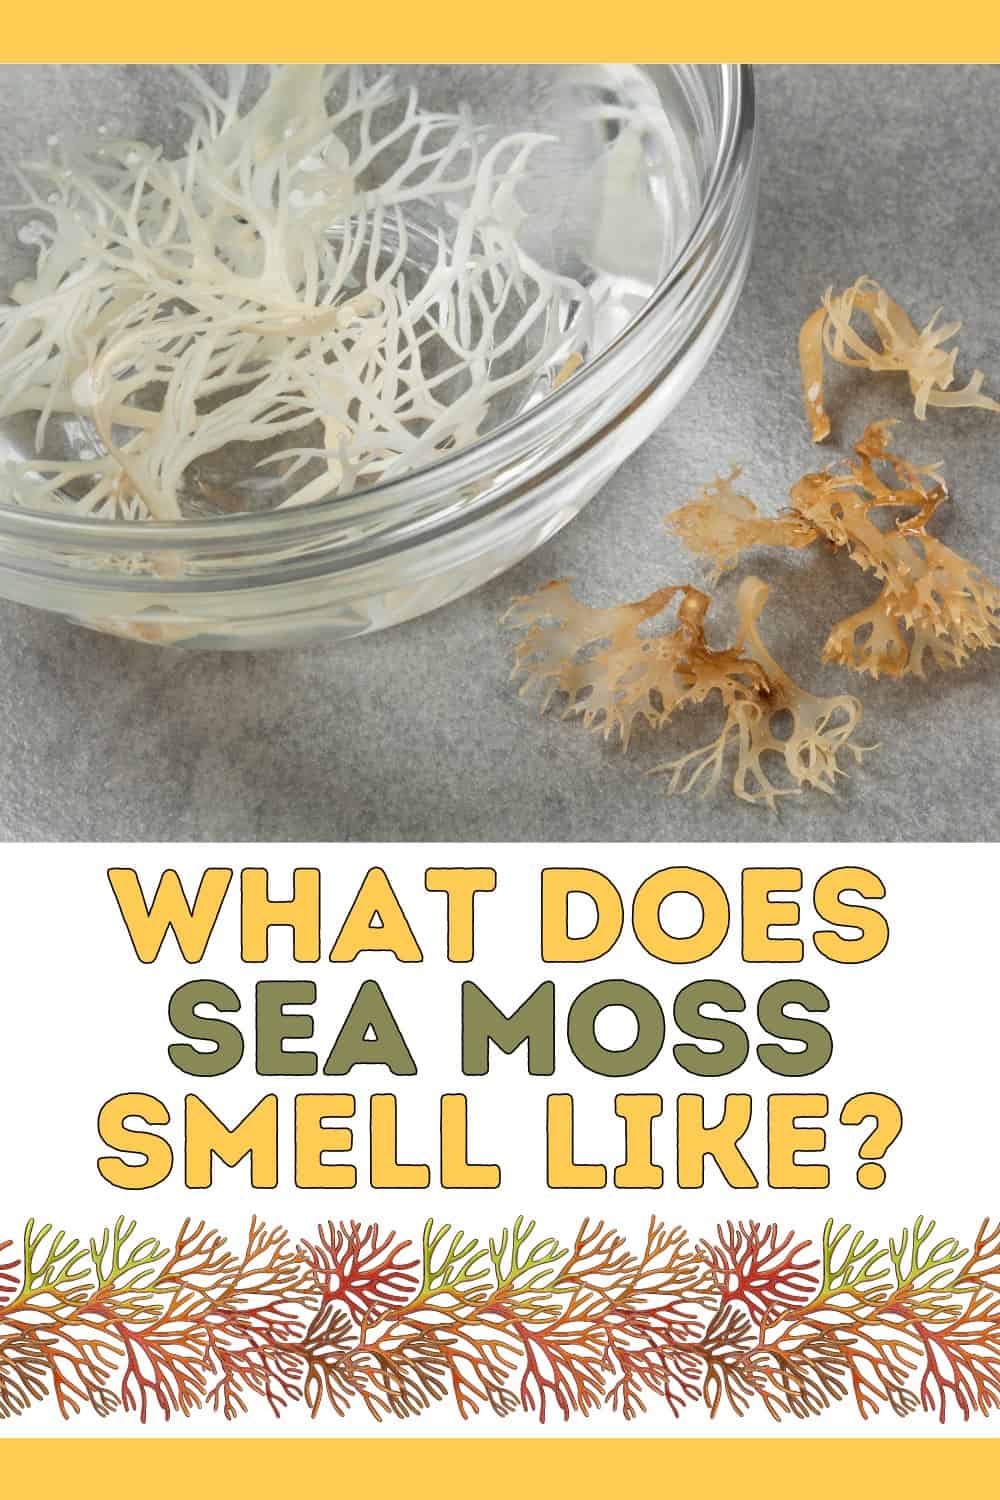 Sea moss smells like the ocean